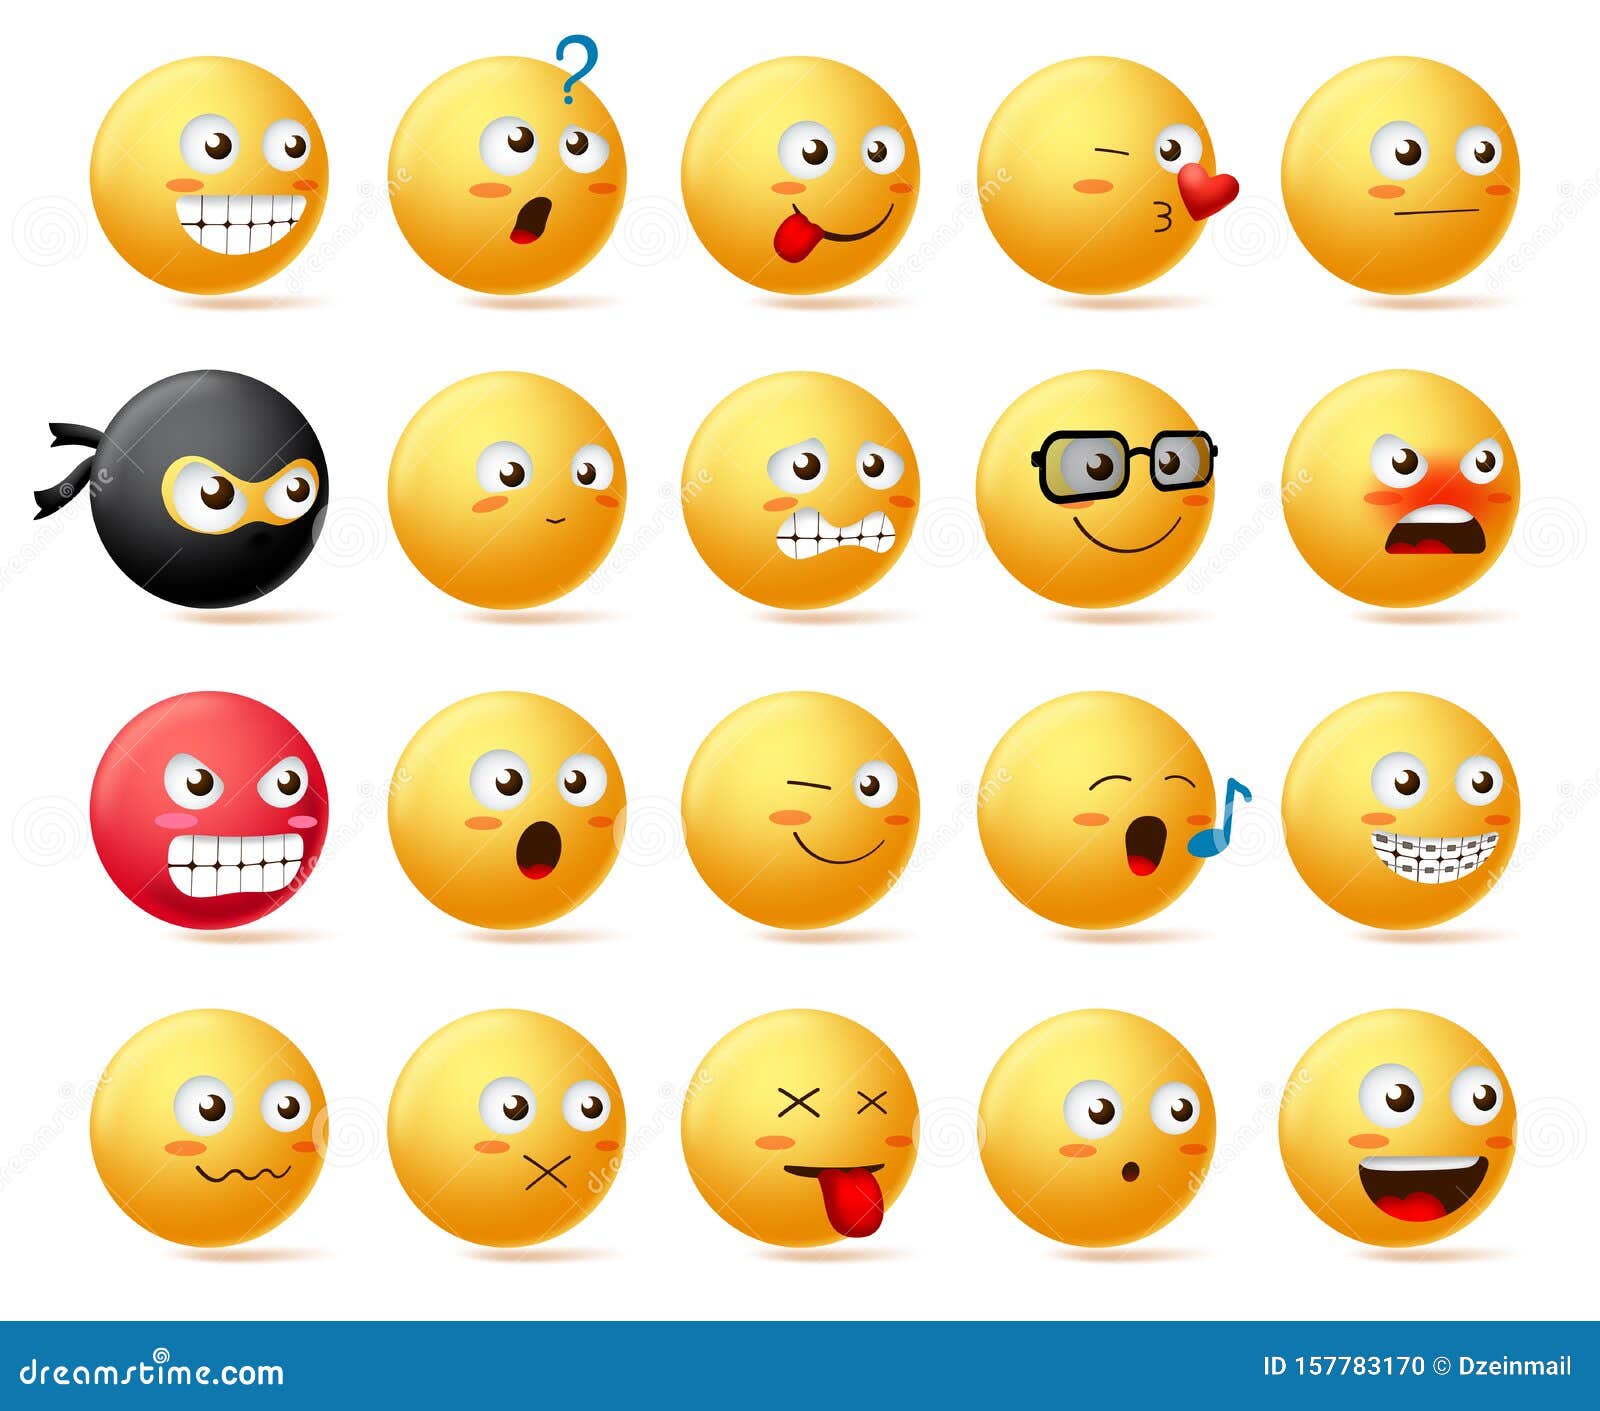 Smileys Emoji Faces Vector Set Smiley Emoticons With Side View Faces